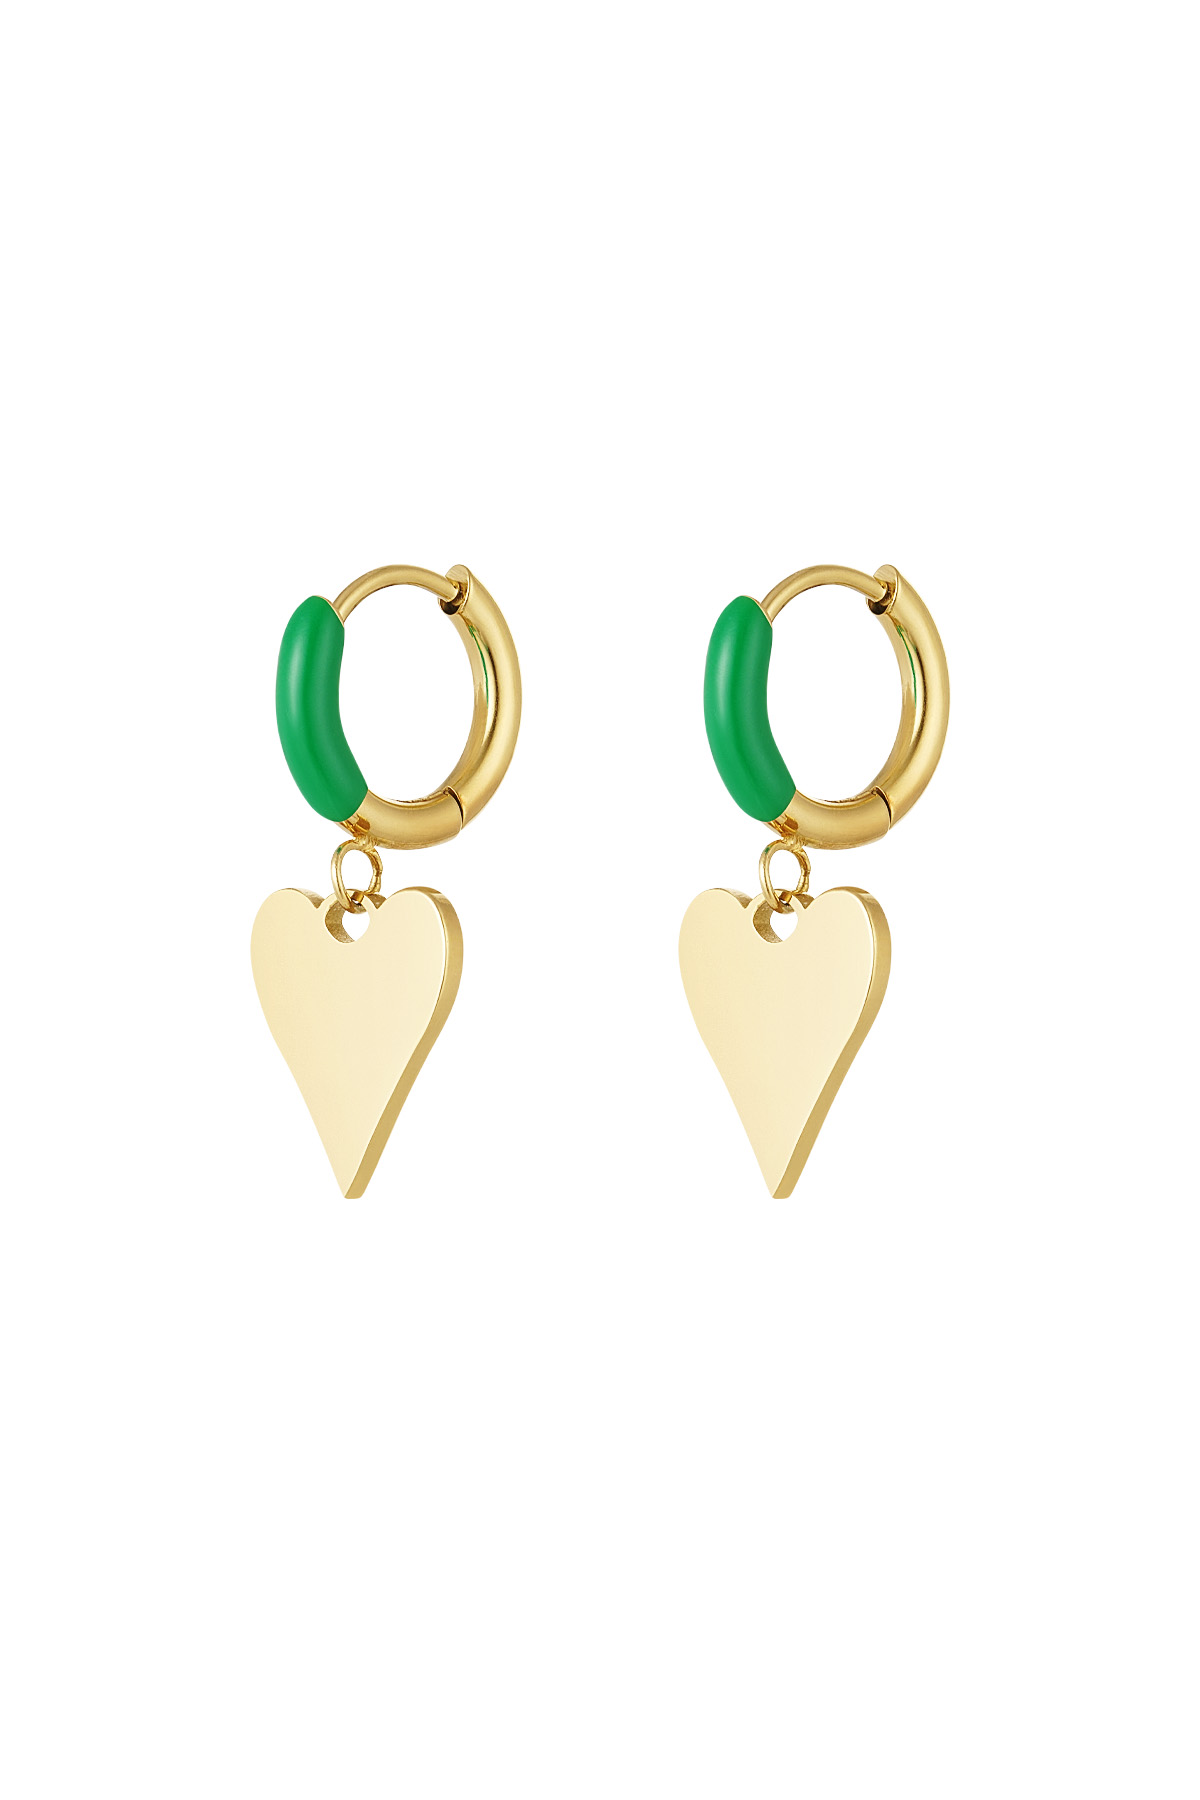 Ohrringe buntes Herz - gold/grün h5 